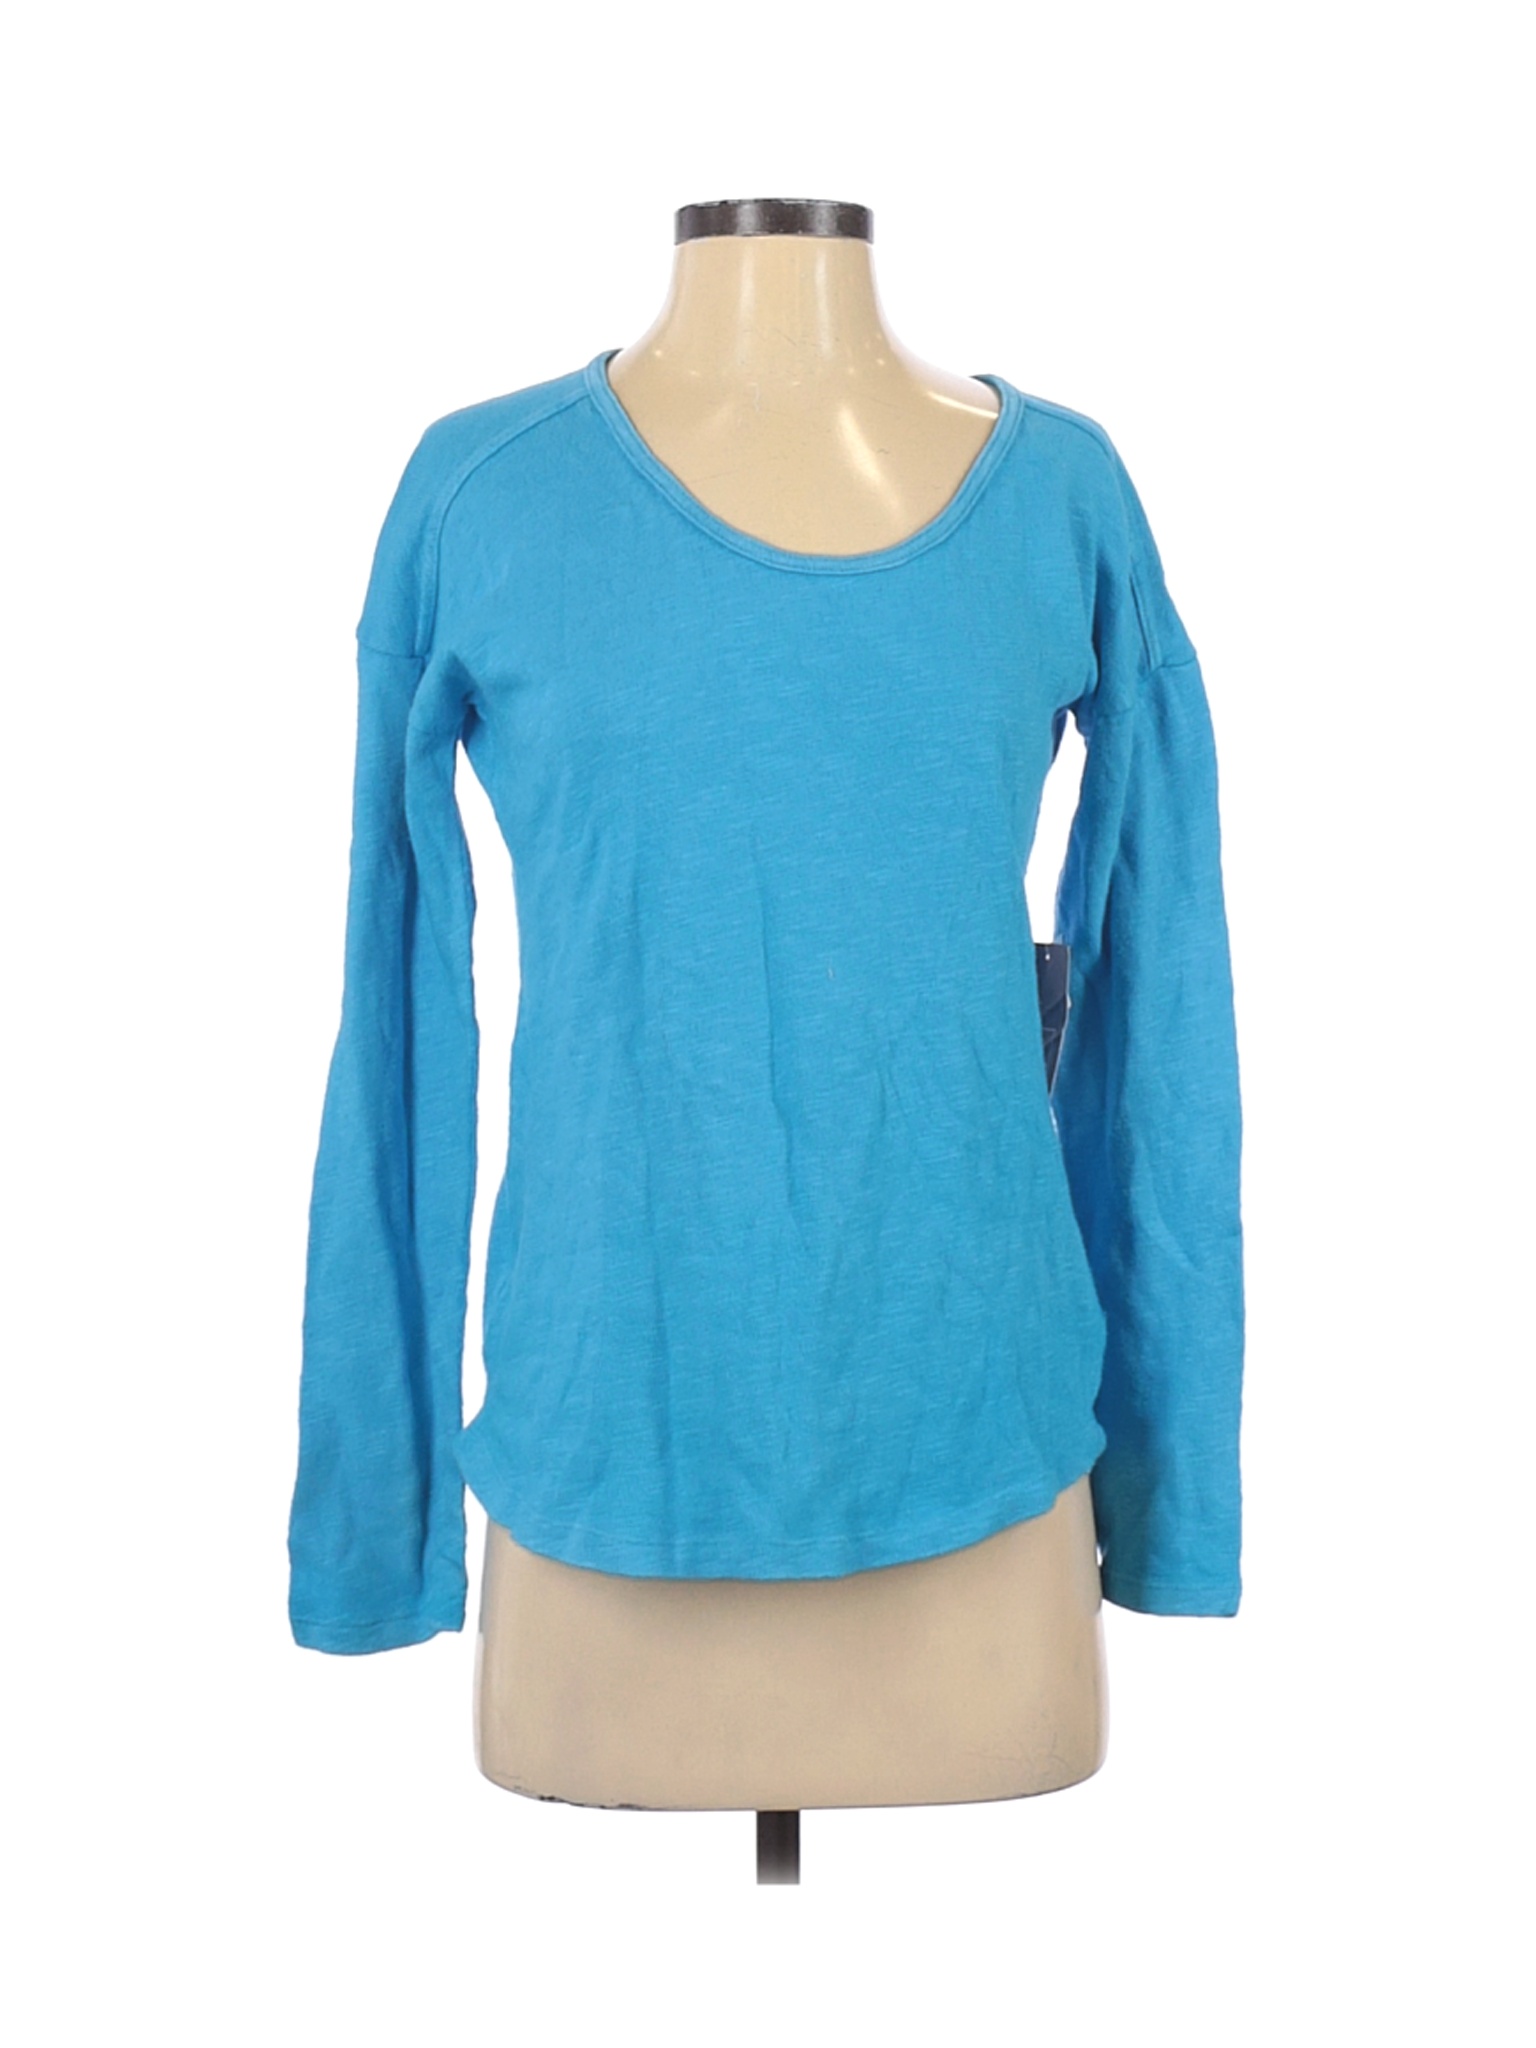 NWT Gap Women Blue Long Sleeve T-Shirt S | eBay